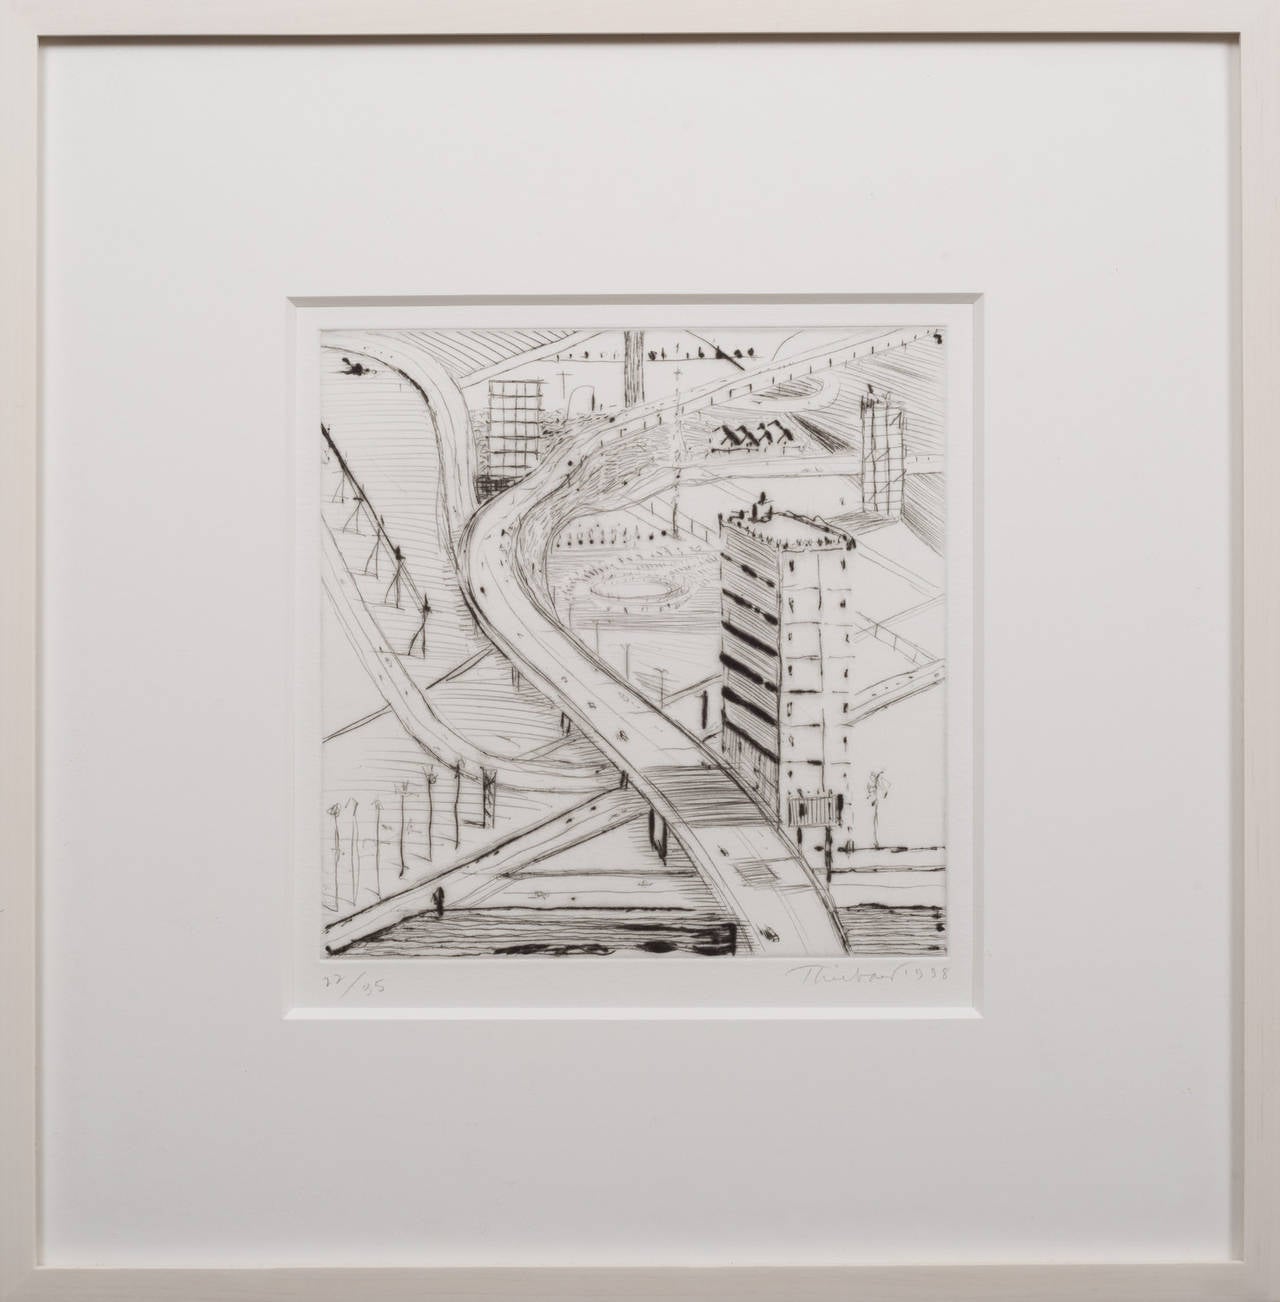 Freeway Building - Contemporary Print by Wayne Thiebaud